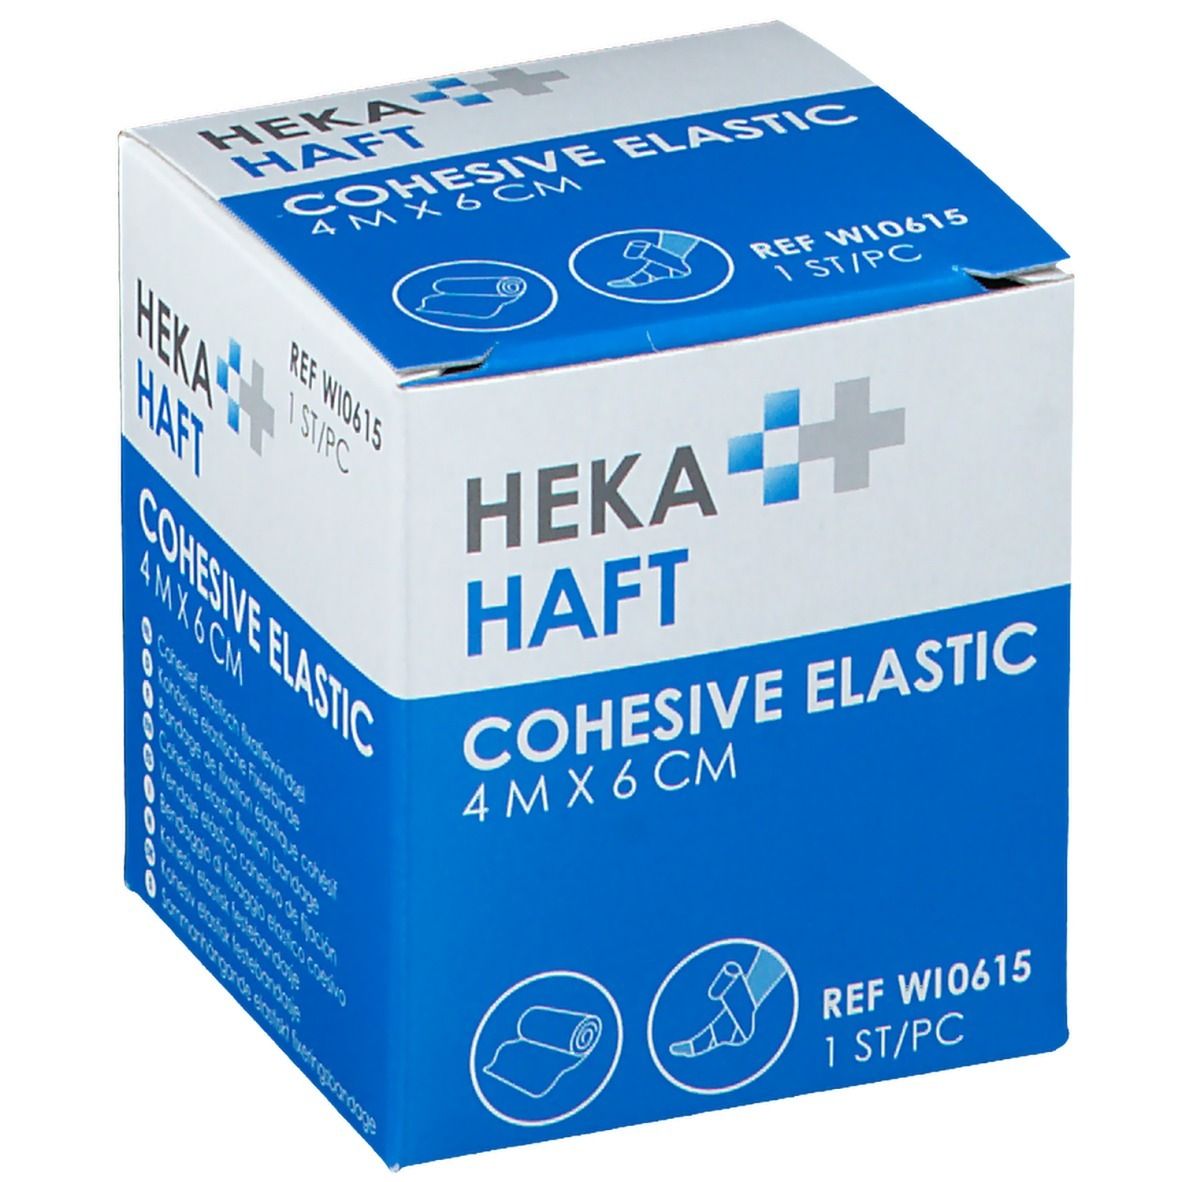 Heka Haft Cohesive Elastic 4 m x 6 cm